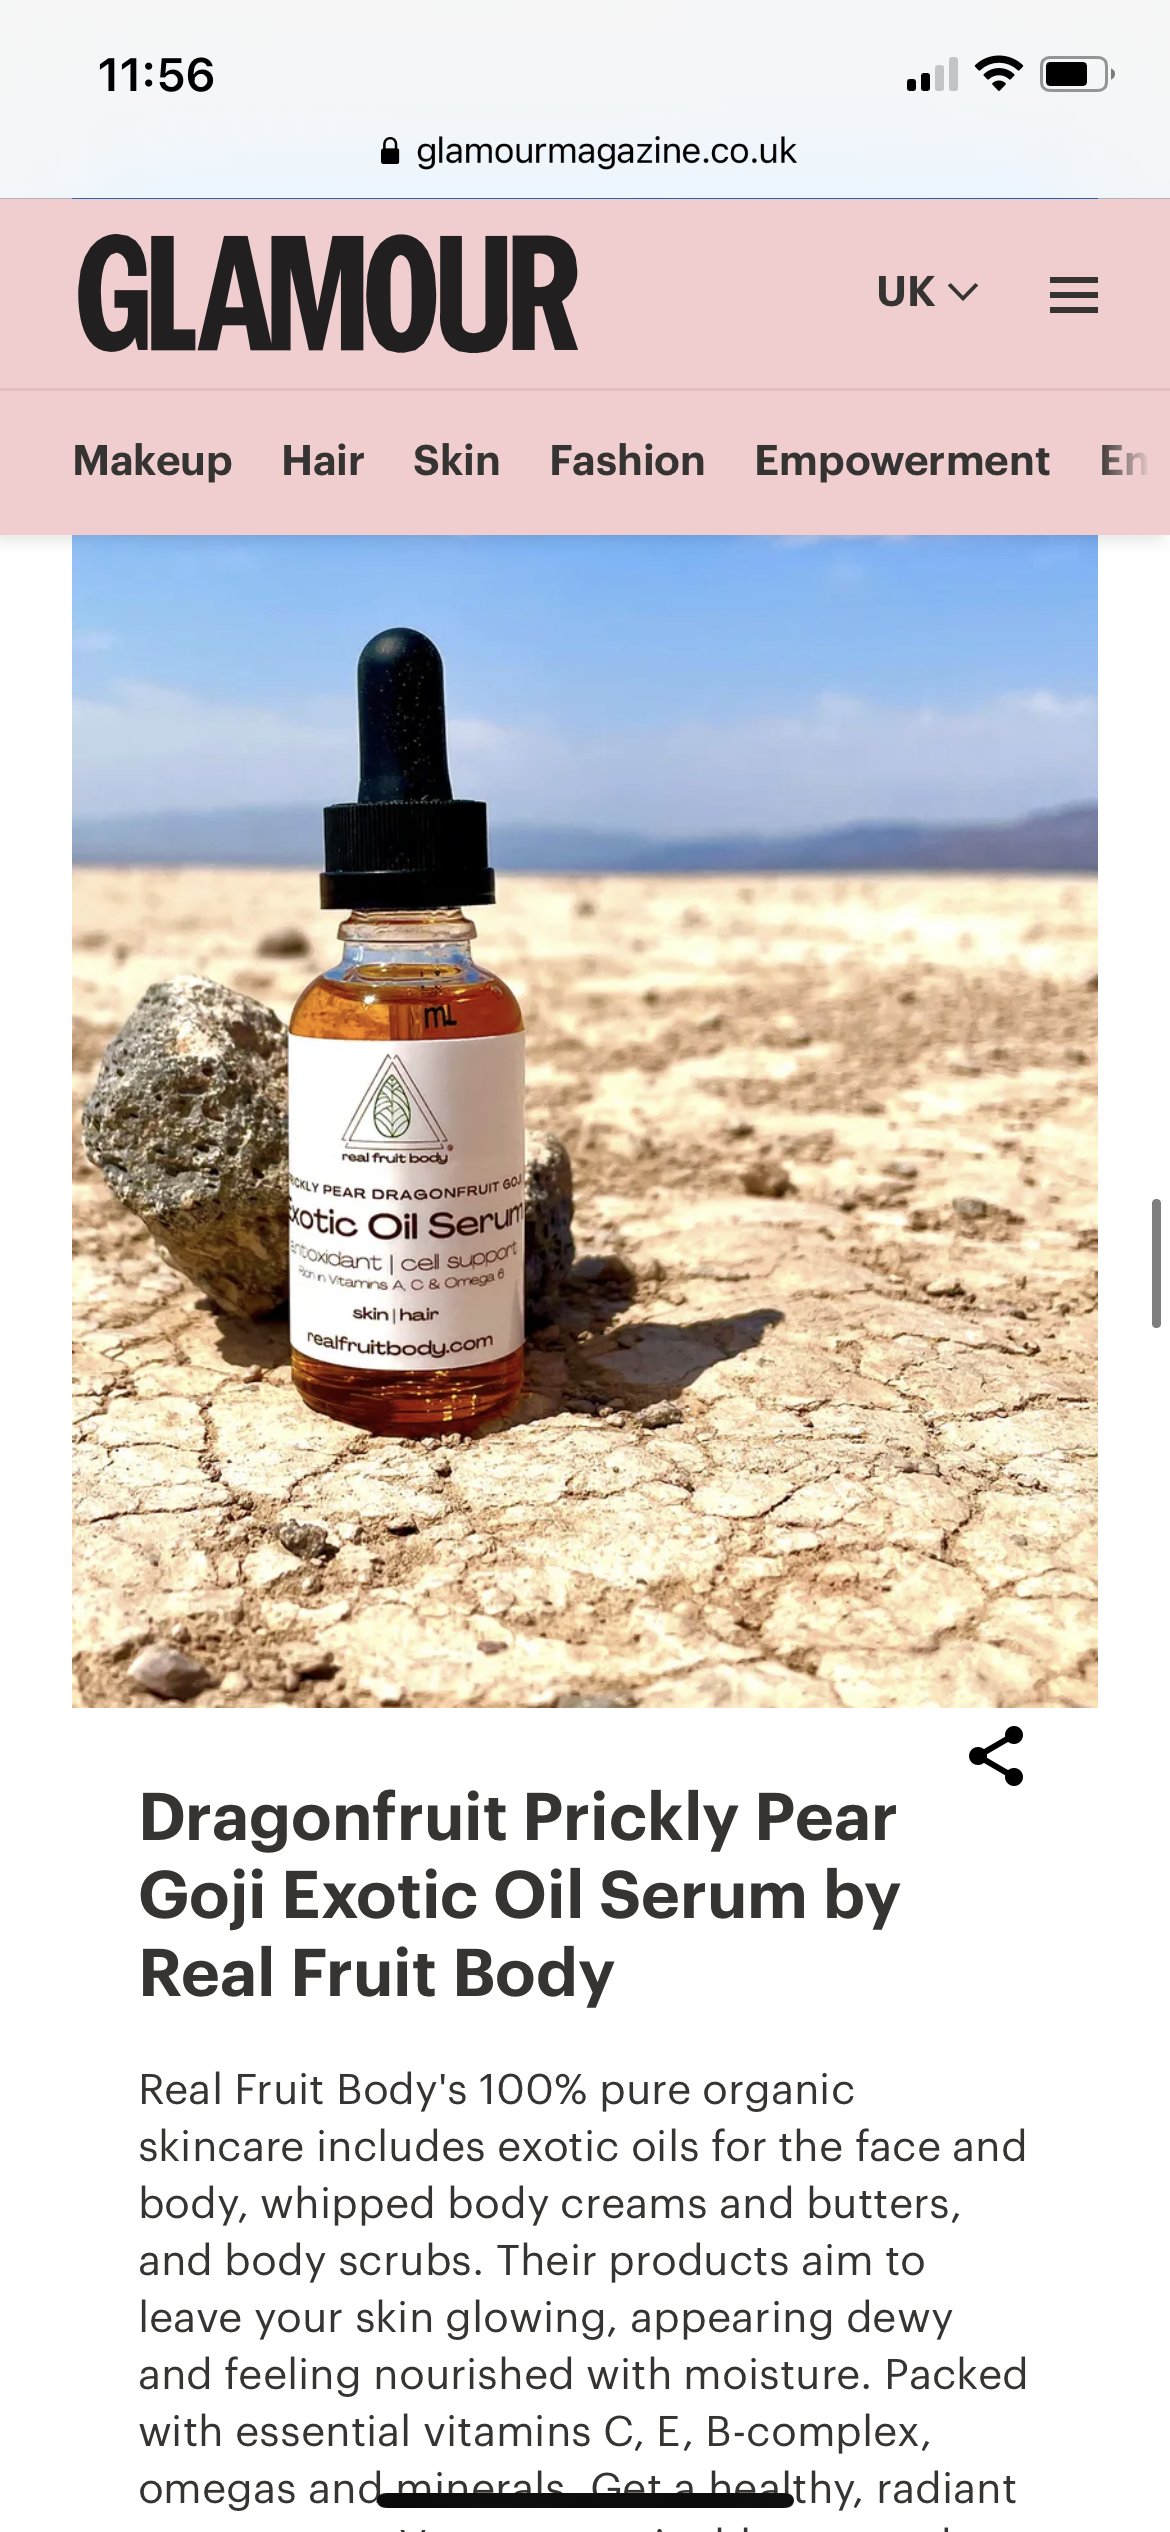 Dragonfruit Prickly Pear Goji Exotic Oil Serum